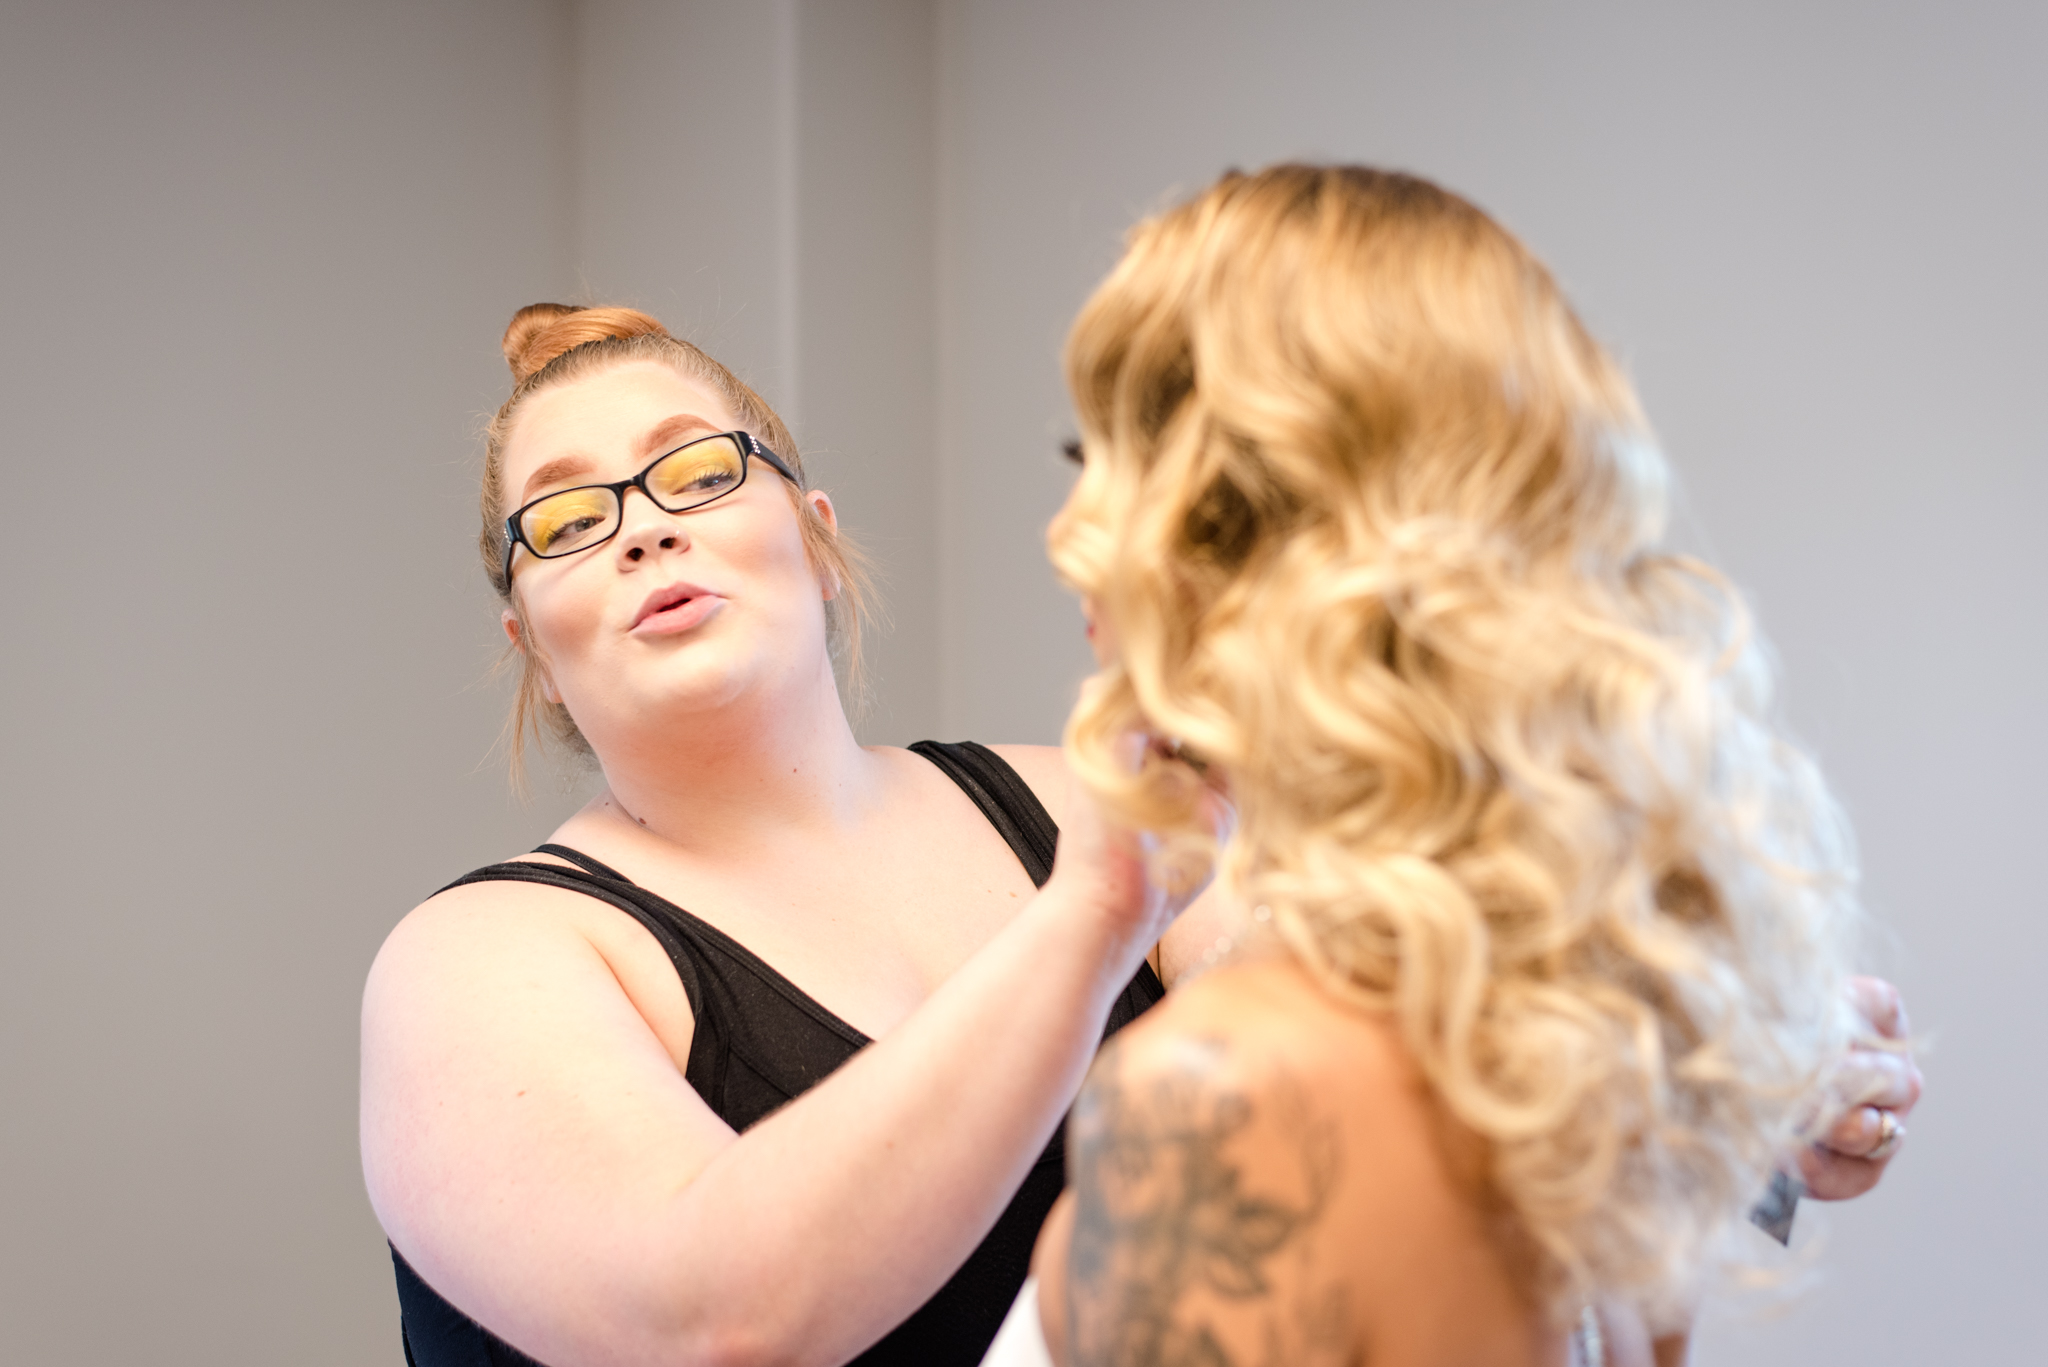 Makeup Artist, Hannah George, applies bridal makeup to a bride.